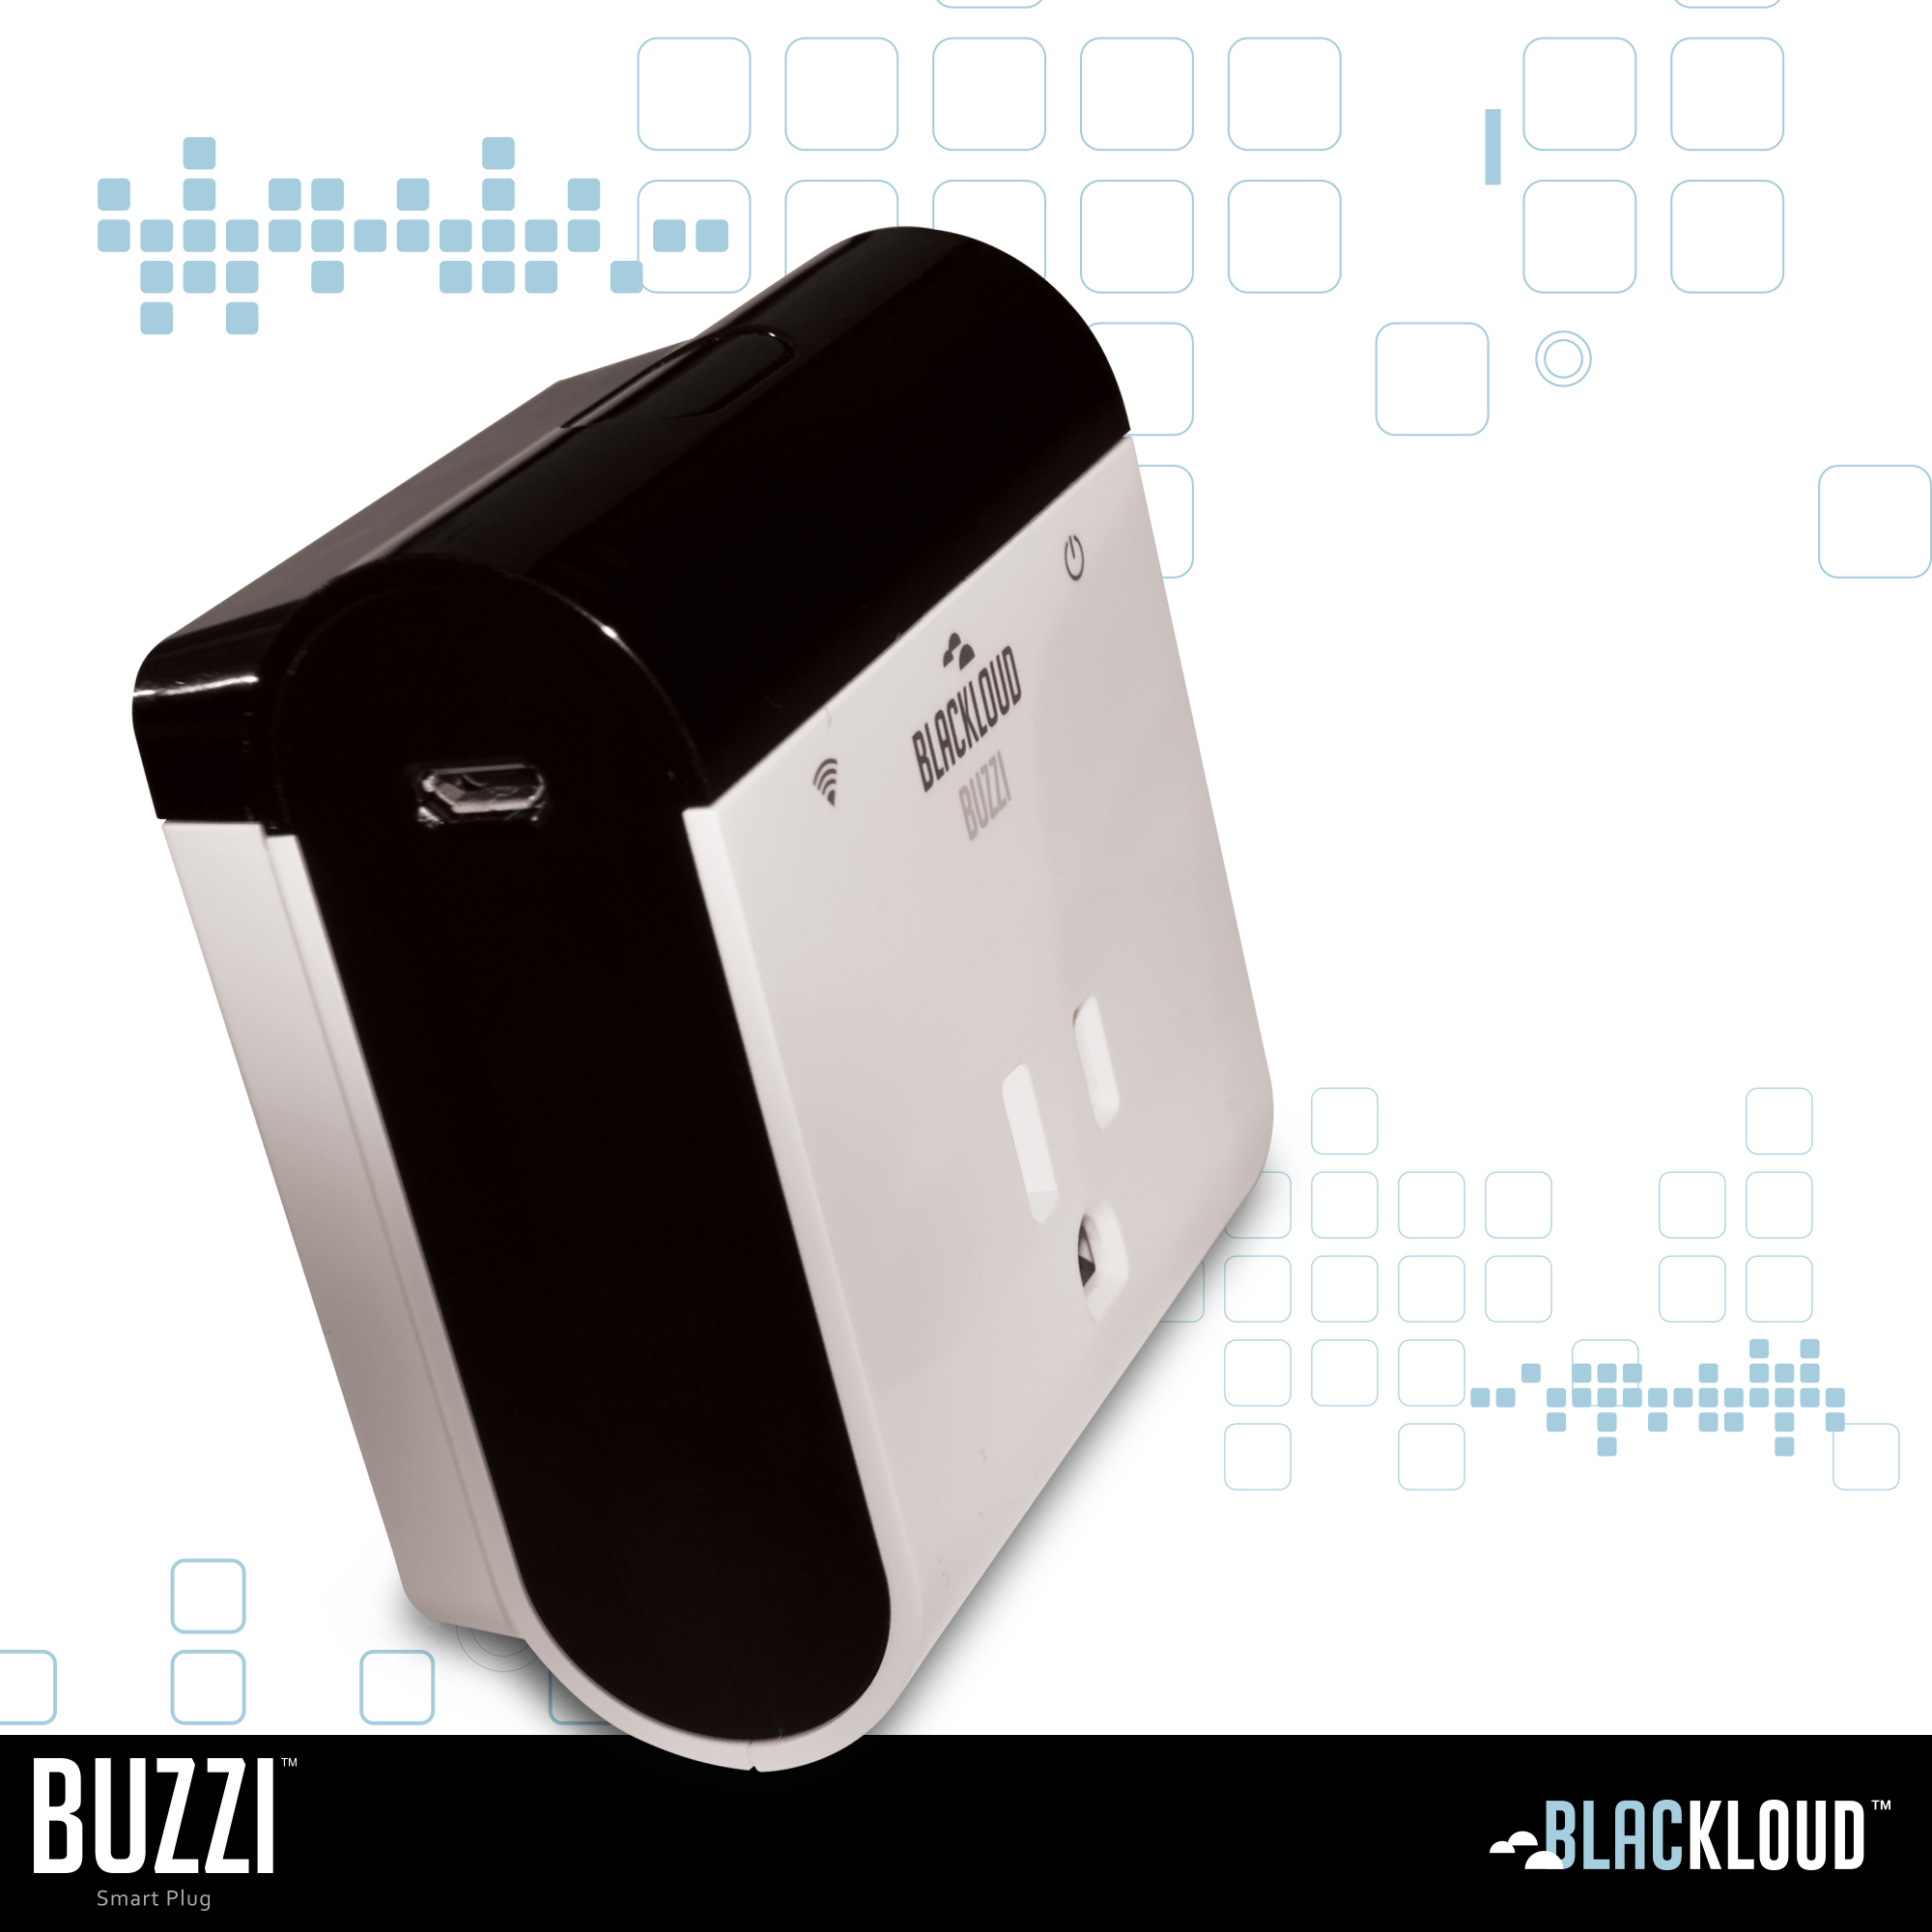 BUZZI Smart Plug Revolutionizes Home Automation